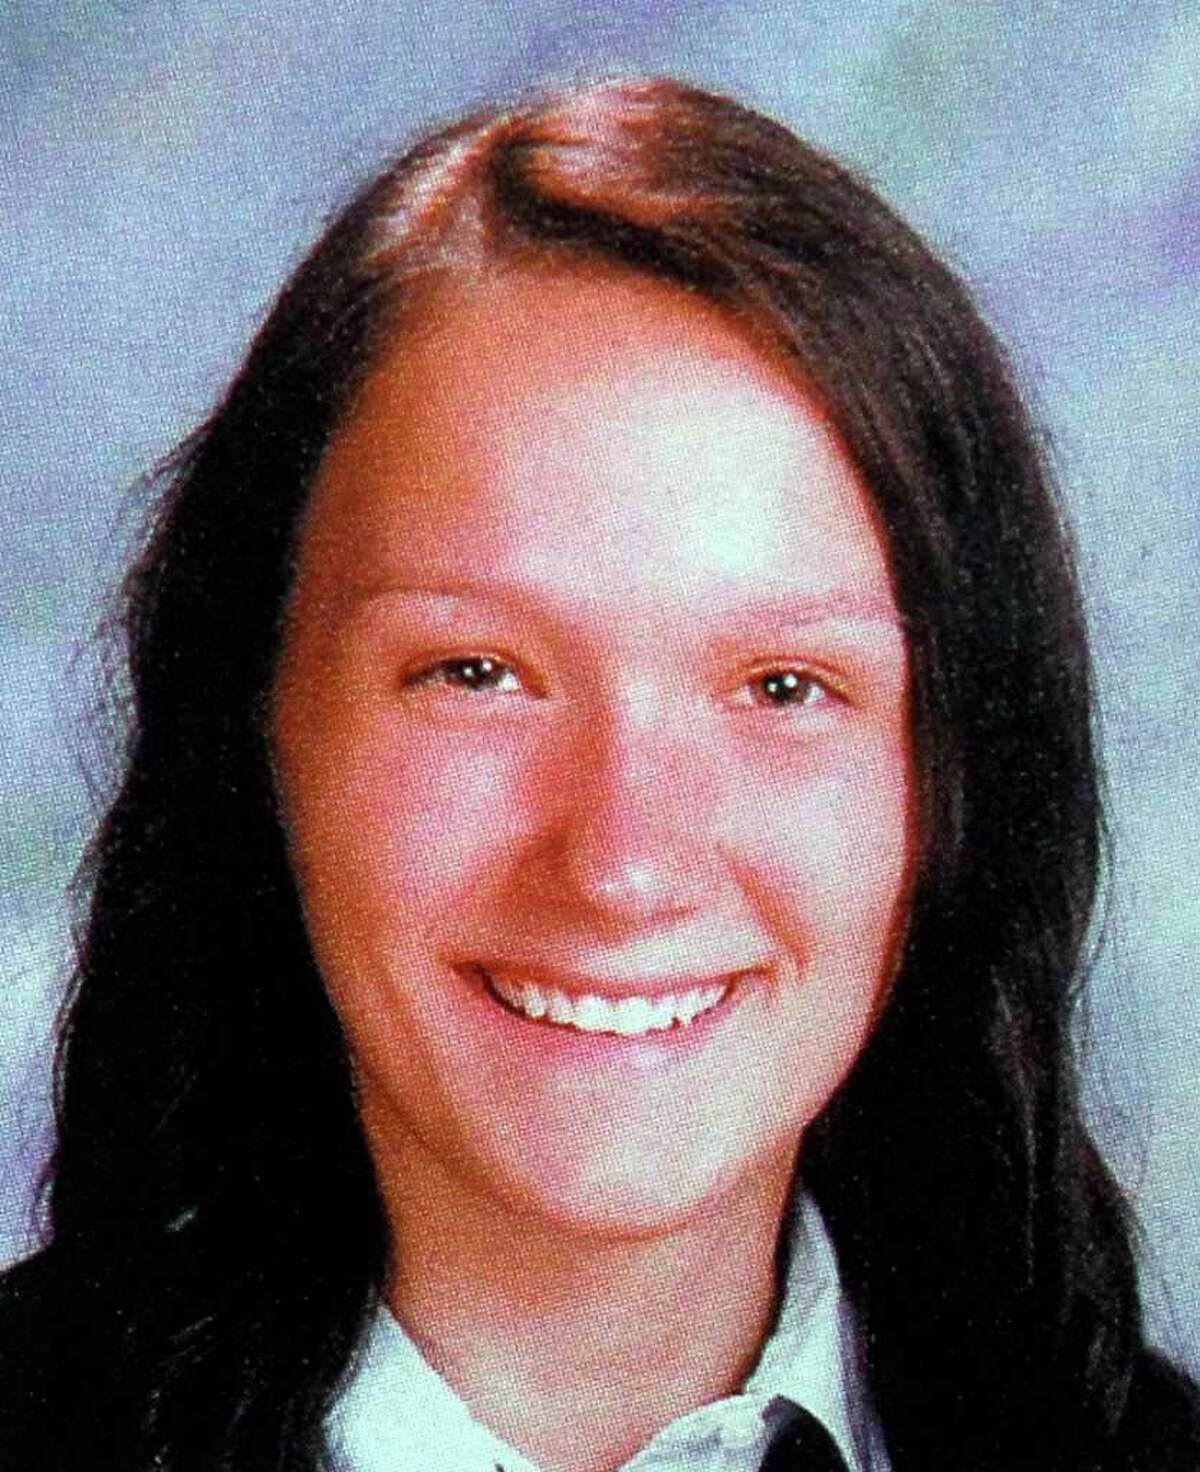 The 2007 Greenwich High School yearbook photo of Amanda Dobrzanski, who was killed in Greenwich in December 2009 by her father, Adam Dobrzanski.